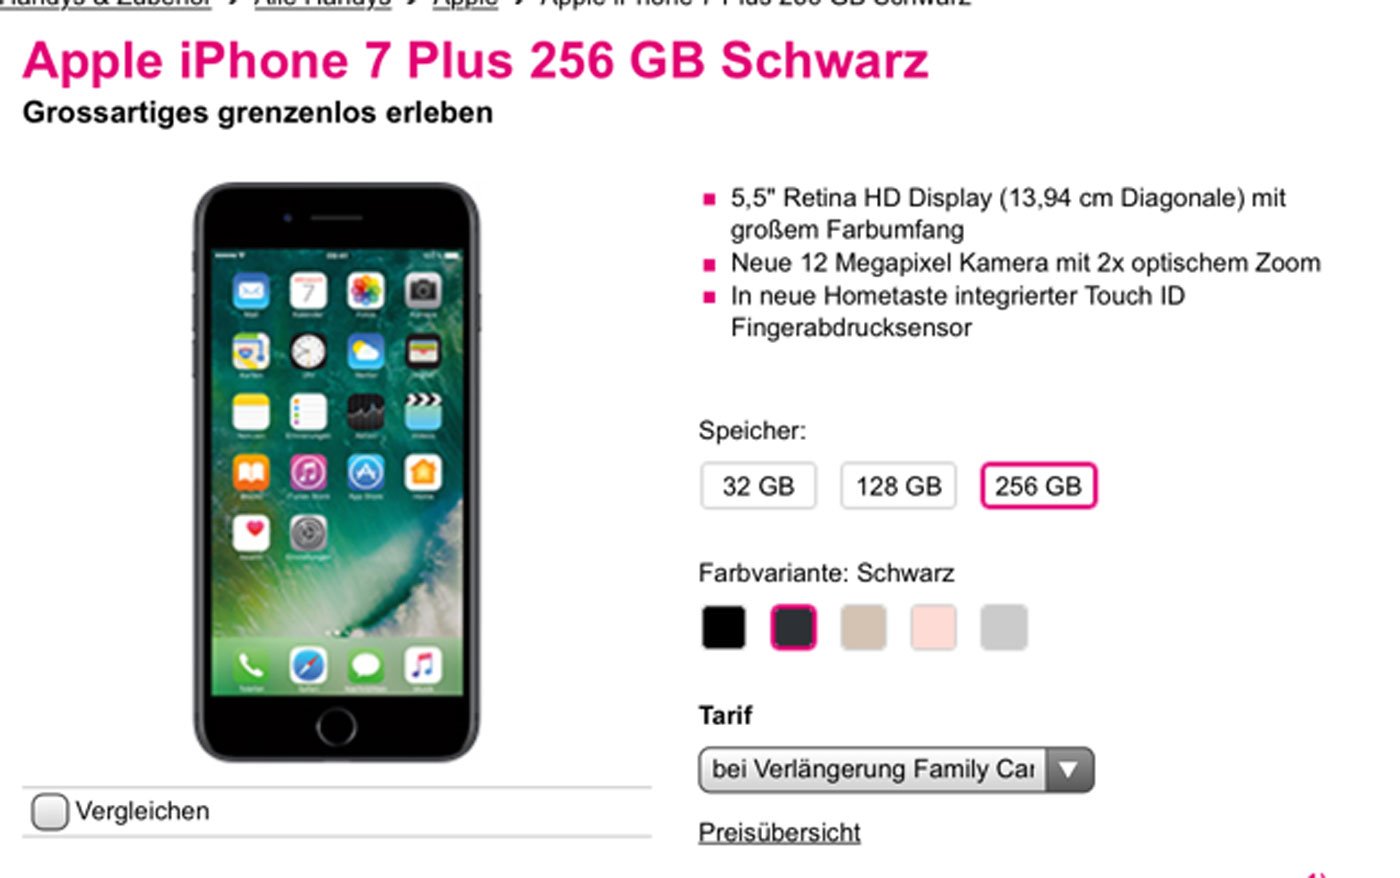 iPhone 7 Vertragsverlängerung (VVL) bei Telekom bereits möglich! 6